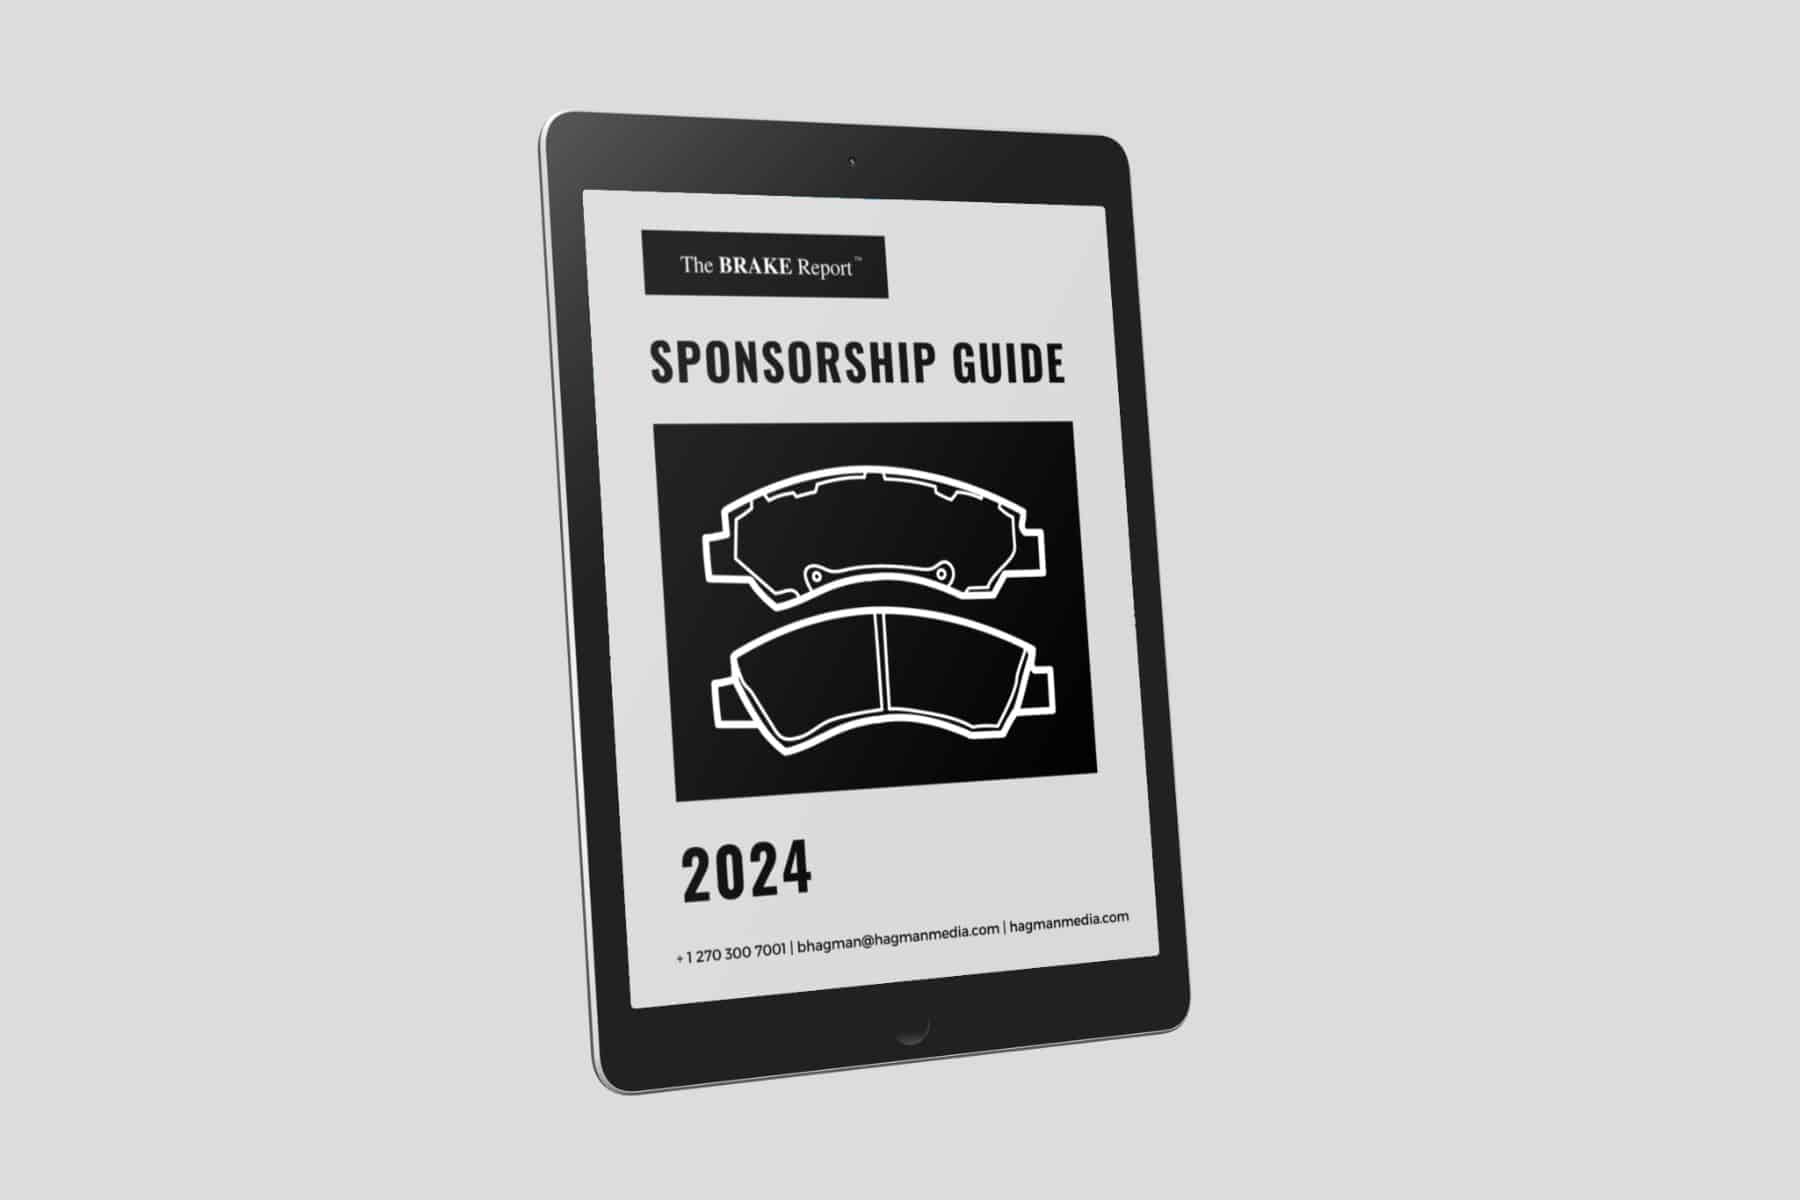 2024 Sponsorship Guide - The BRAKE Report